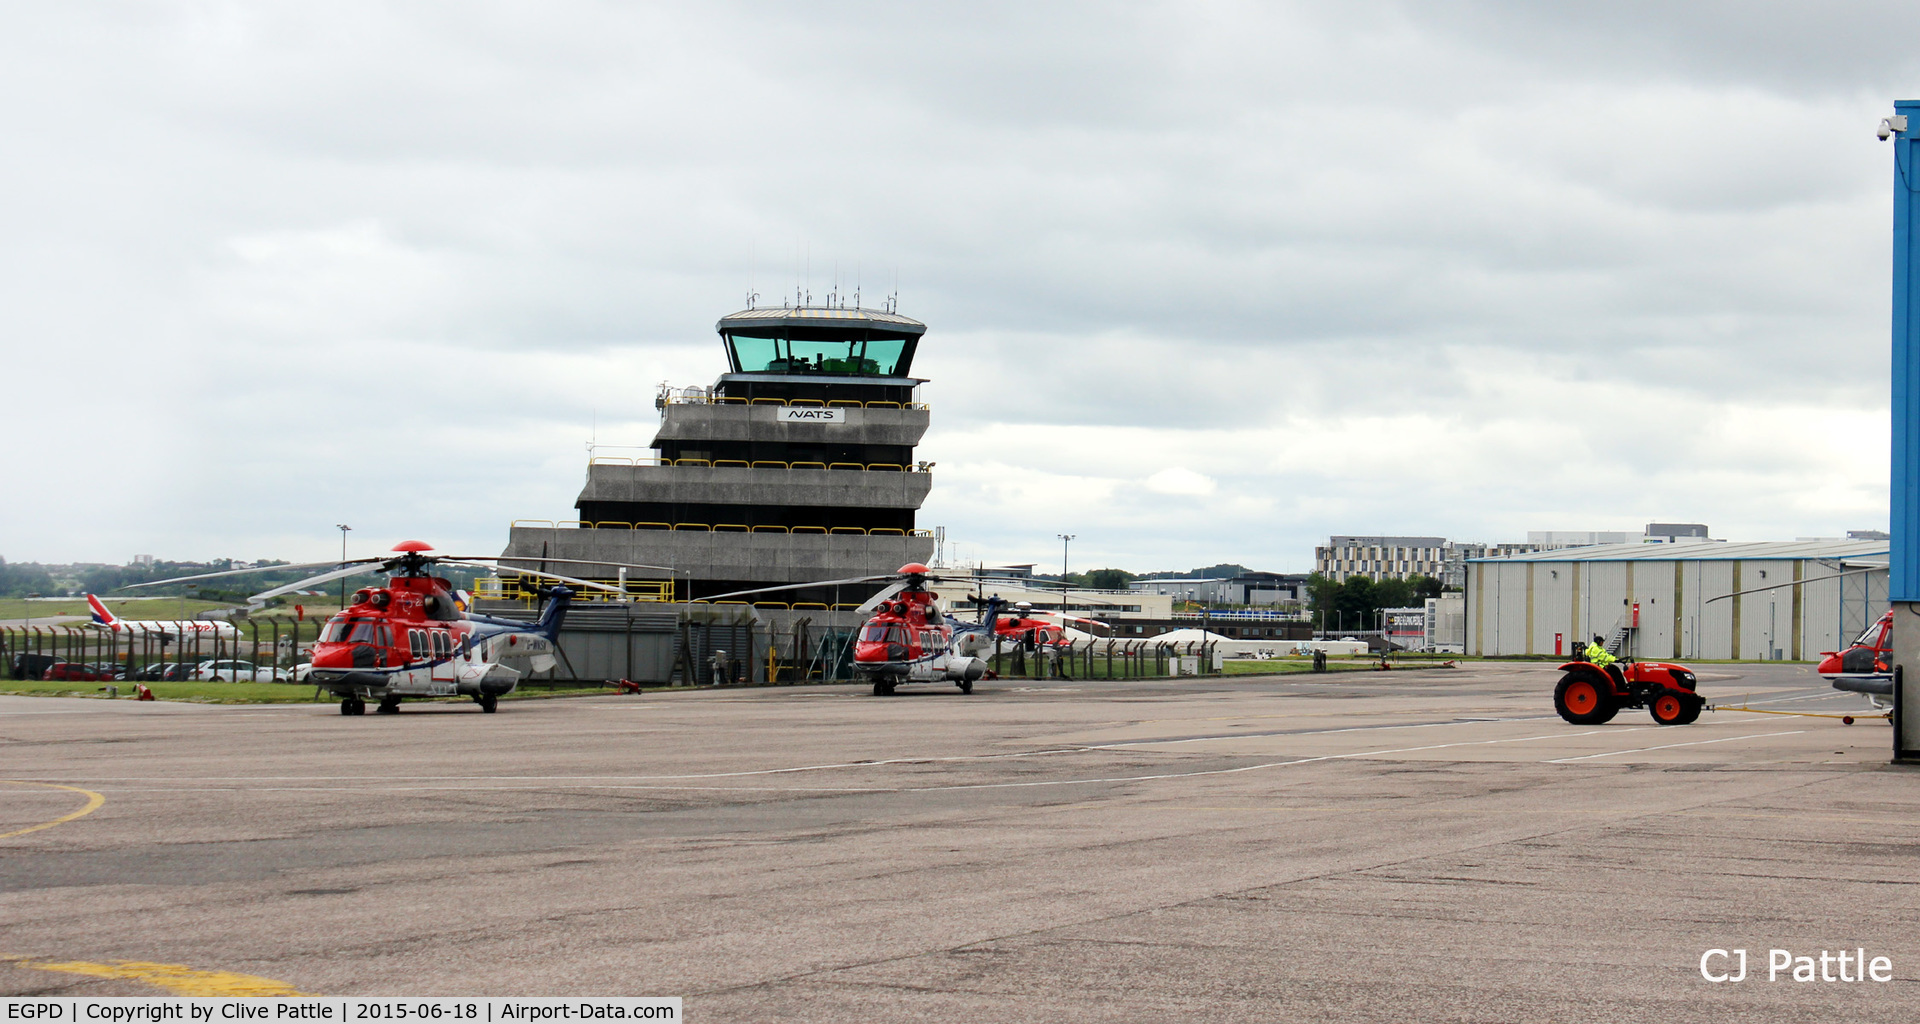 Aberdeen Airport, Aberdeen, Scotland United Kingdom (EGPD) - Apron activity at Aberdeen Airport, Scotland EGPD